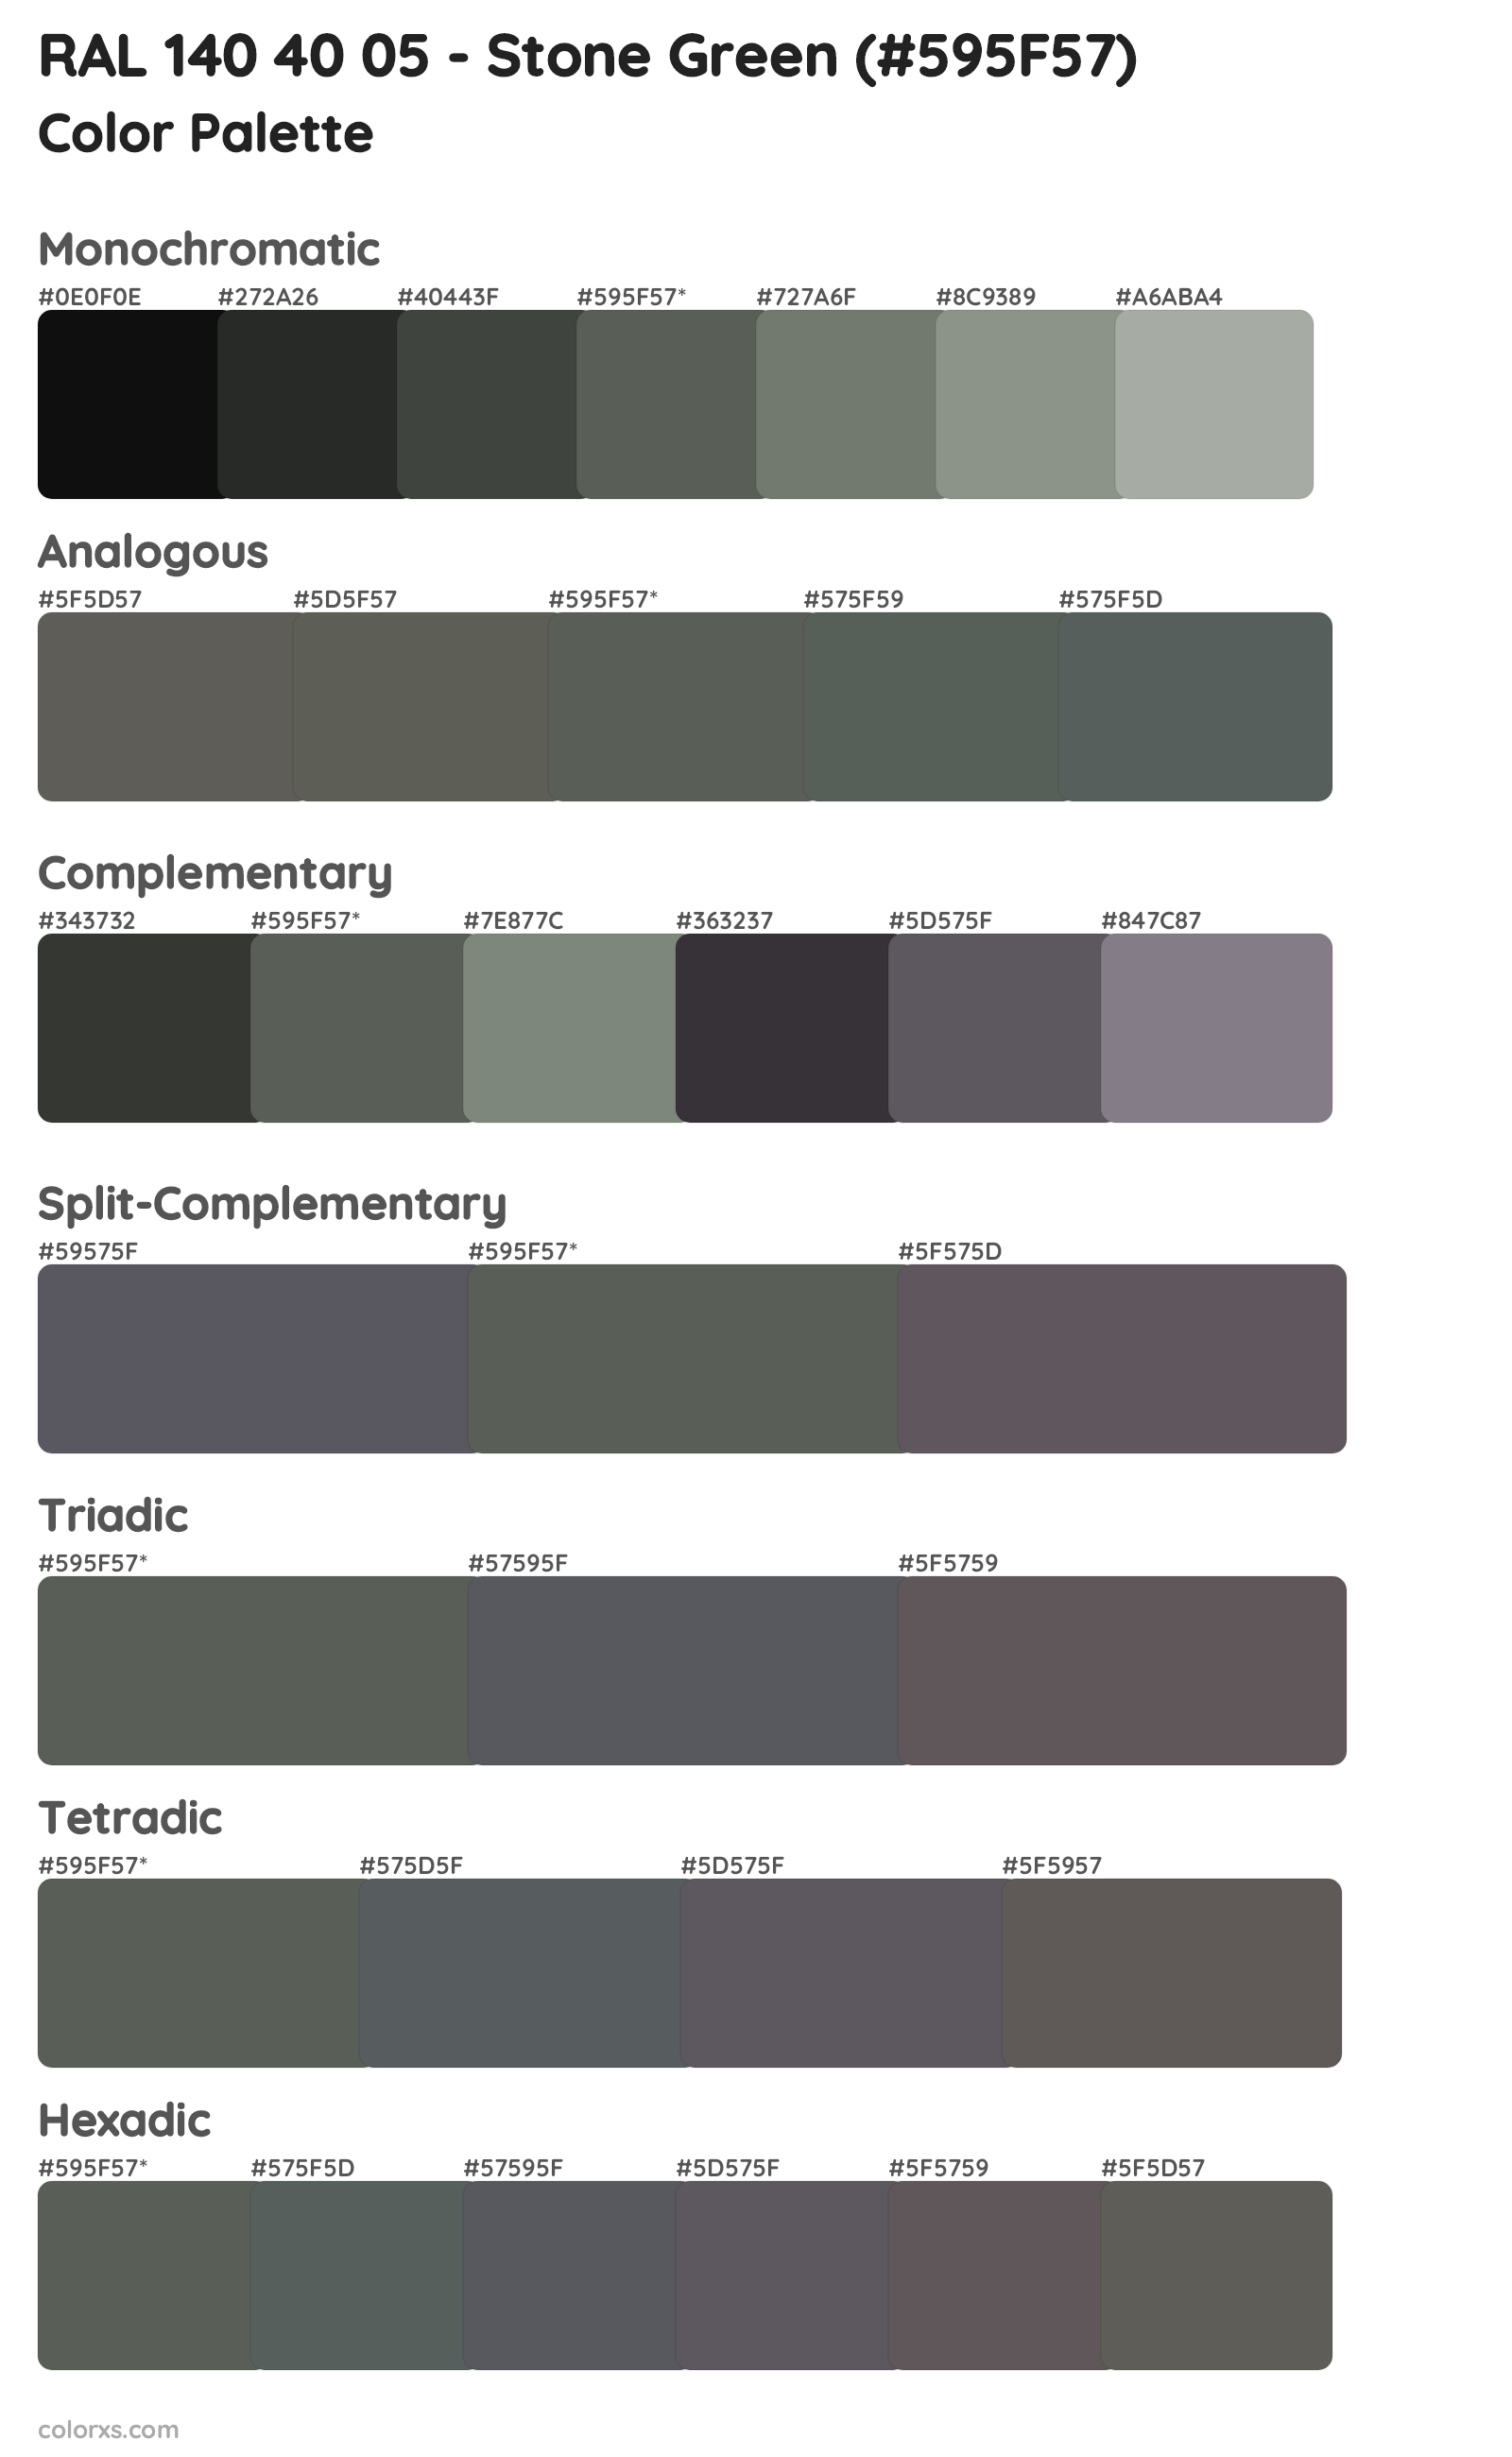 RAL 140 40 05 - Stone Green Color Scheme Palettes